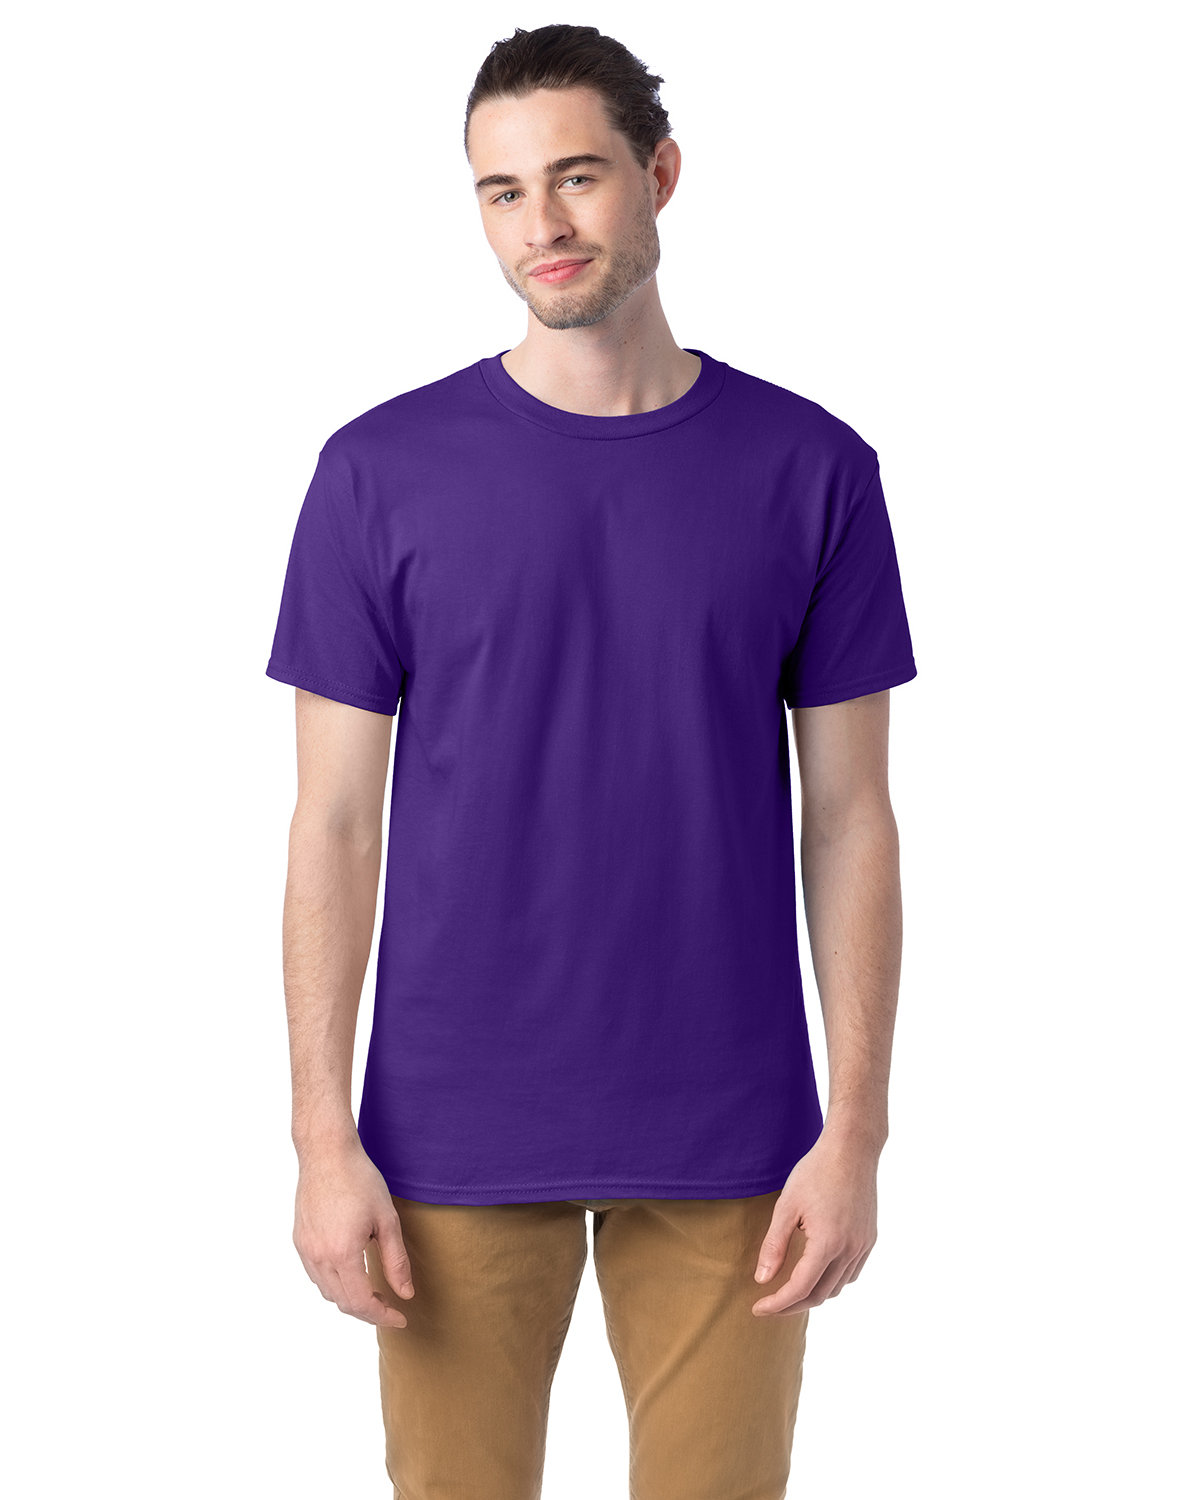 Hanes Adult Essential Short Sleeve T-Shirt athletic purple 